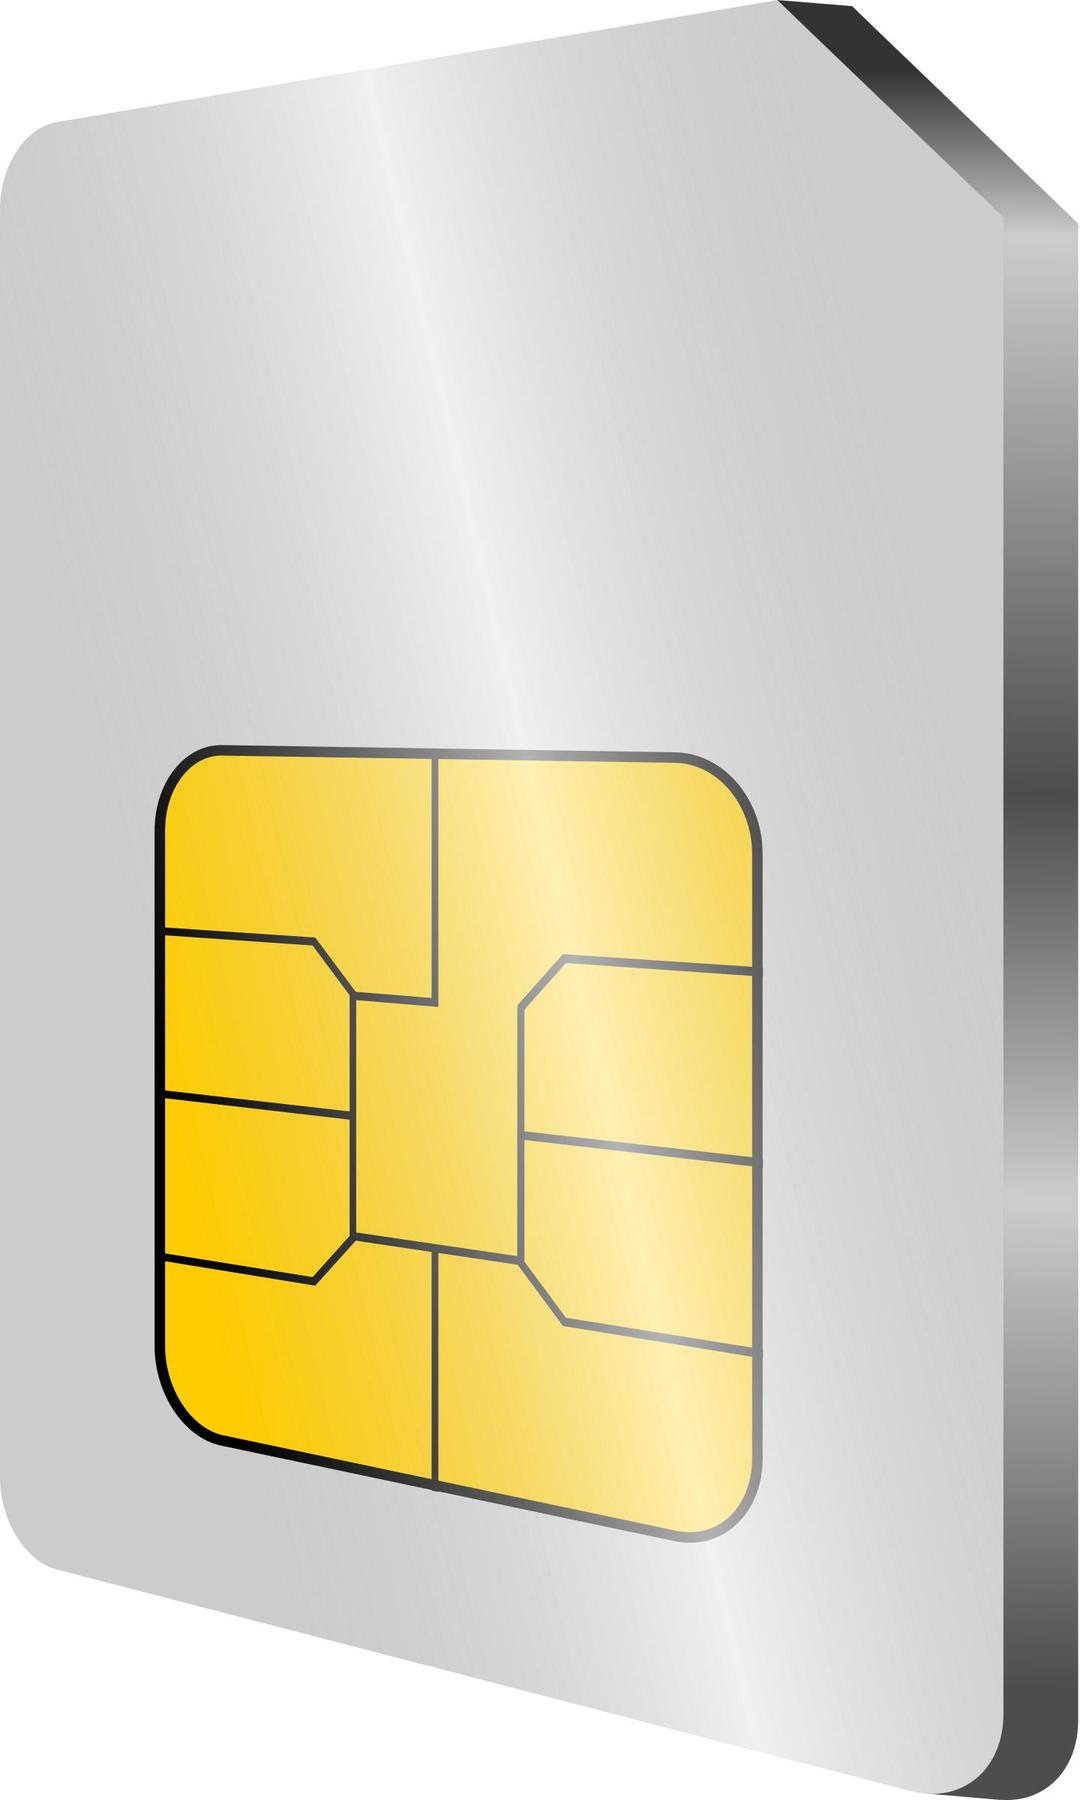 Sim Card - Mobile Phone (remix) png transparent